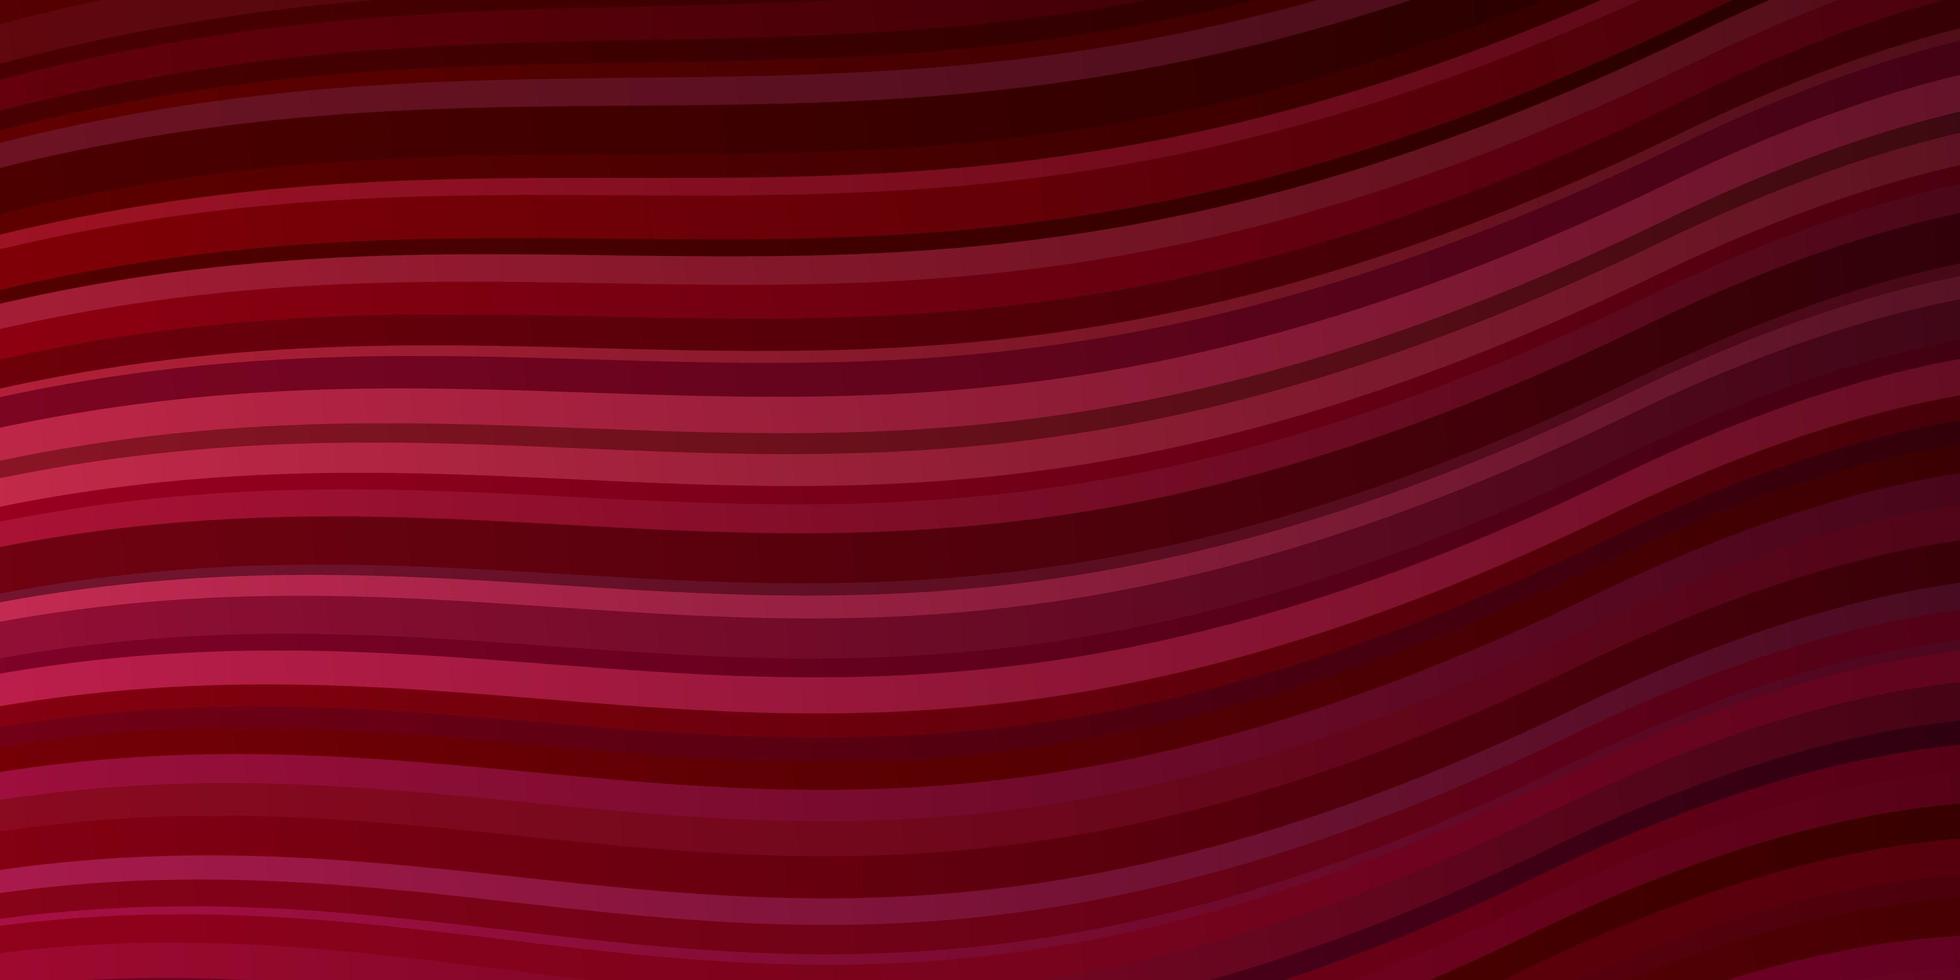 ljusrosa, röd vektorbakgrund med sneda linjer. vektor